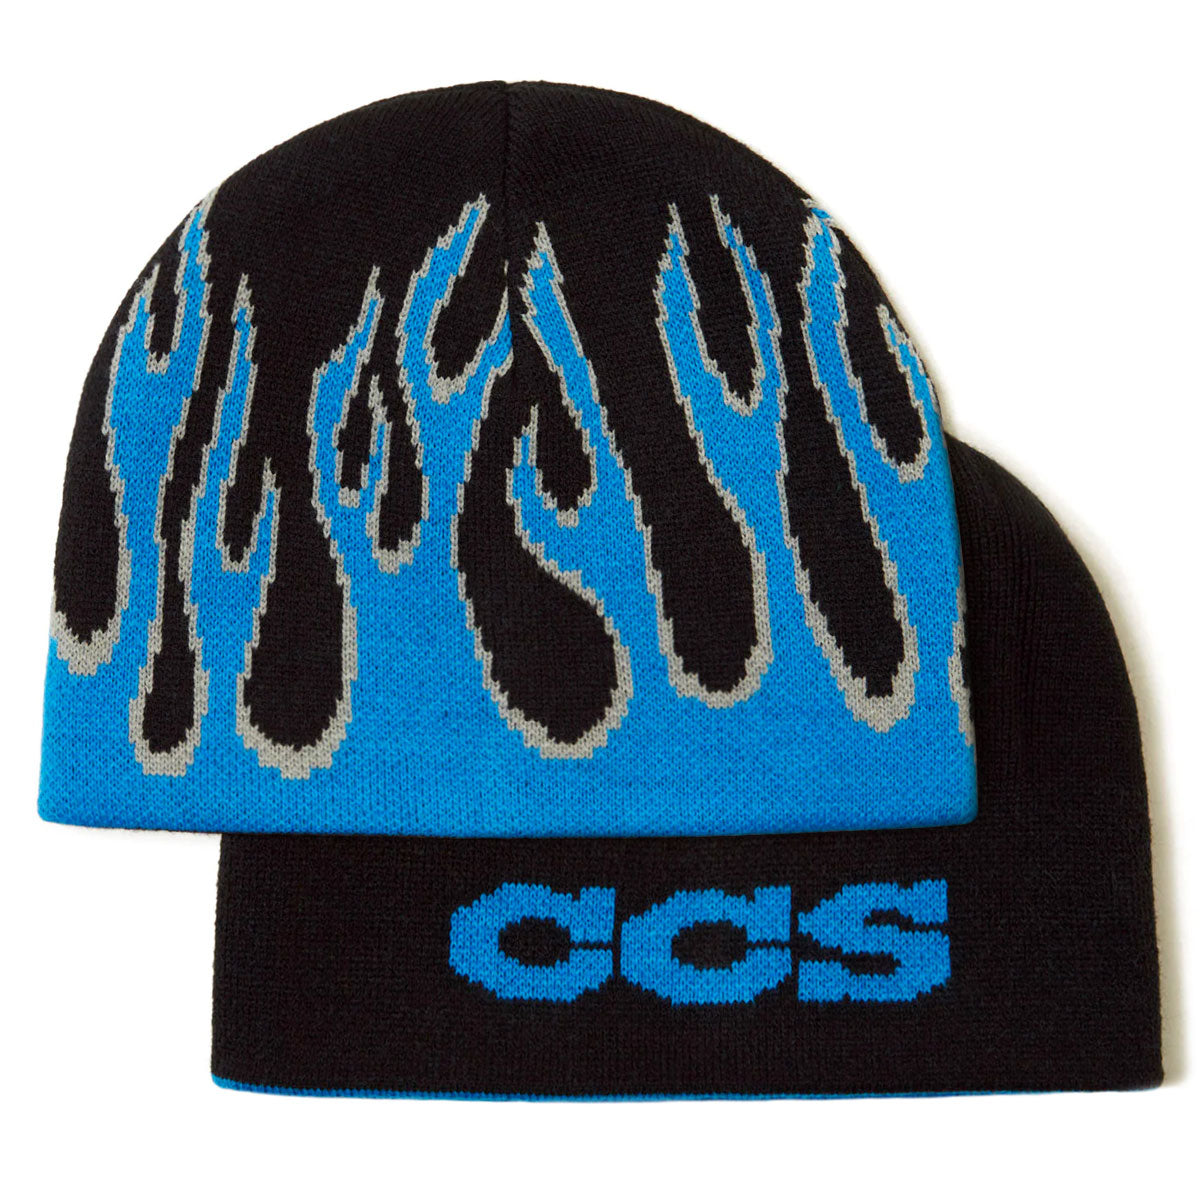 CCS Flames Reversible Skully Beanie - Black/Blue image 1